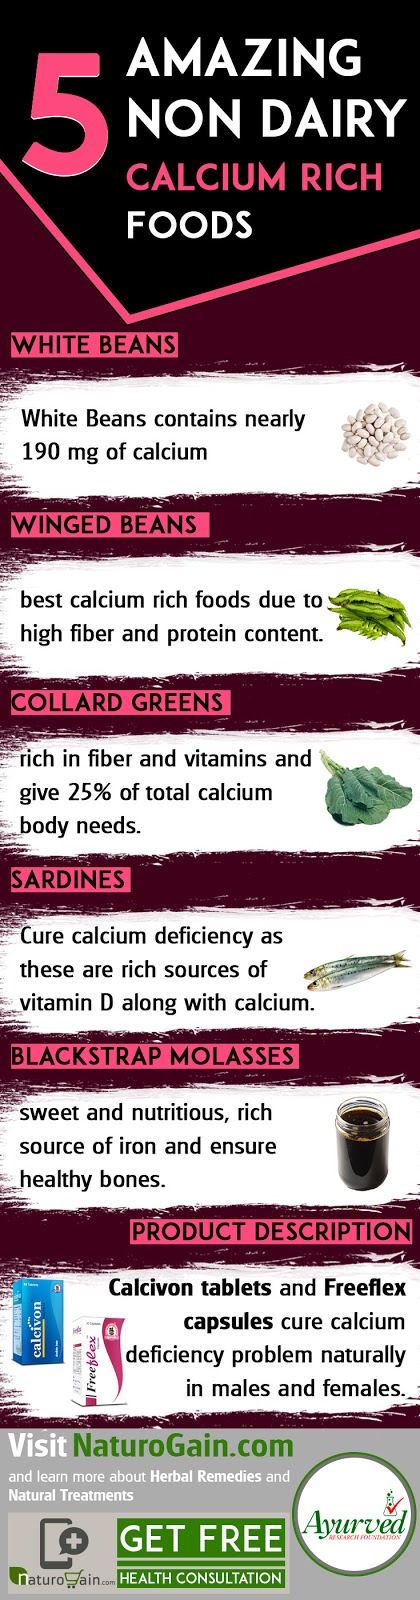 non-dairy-calcium-rich-foods-info-graphic